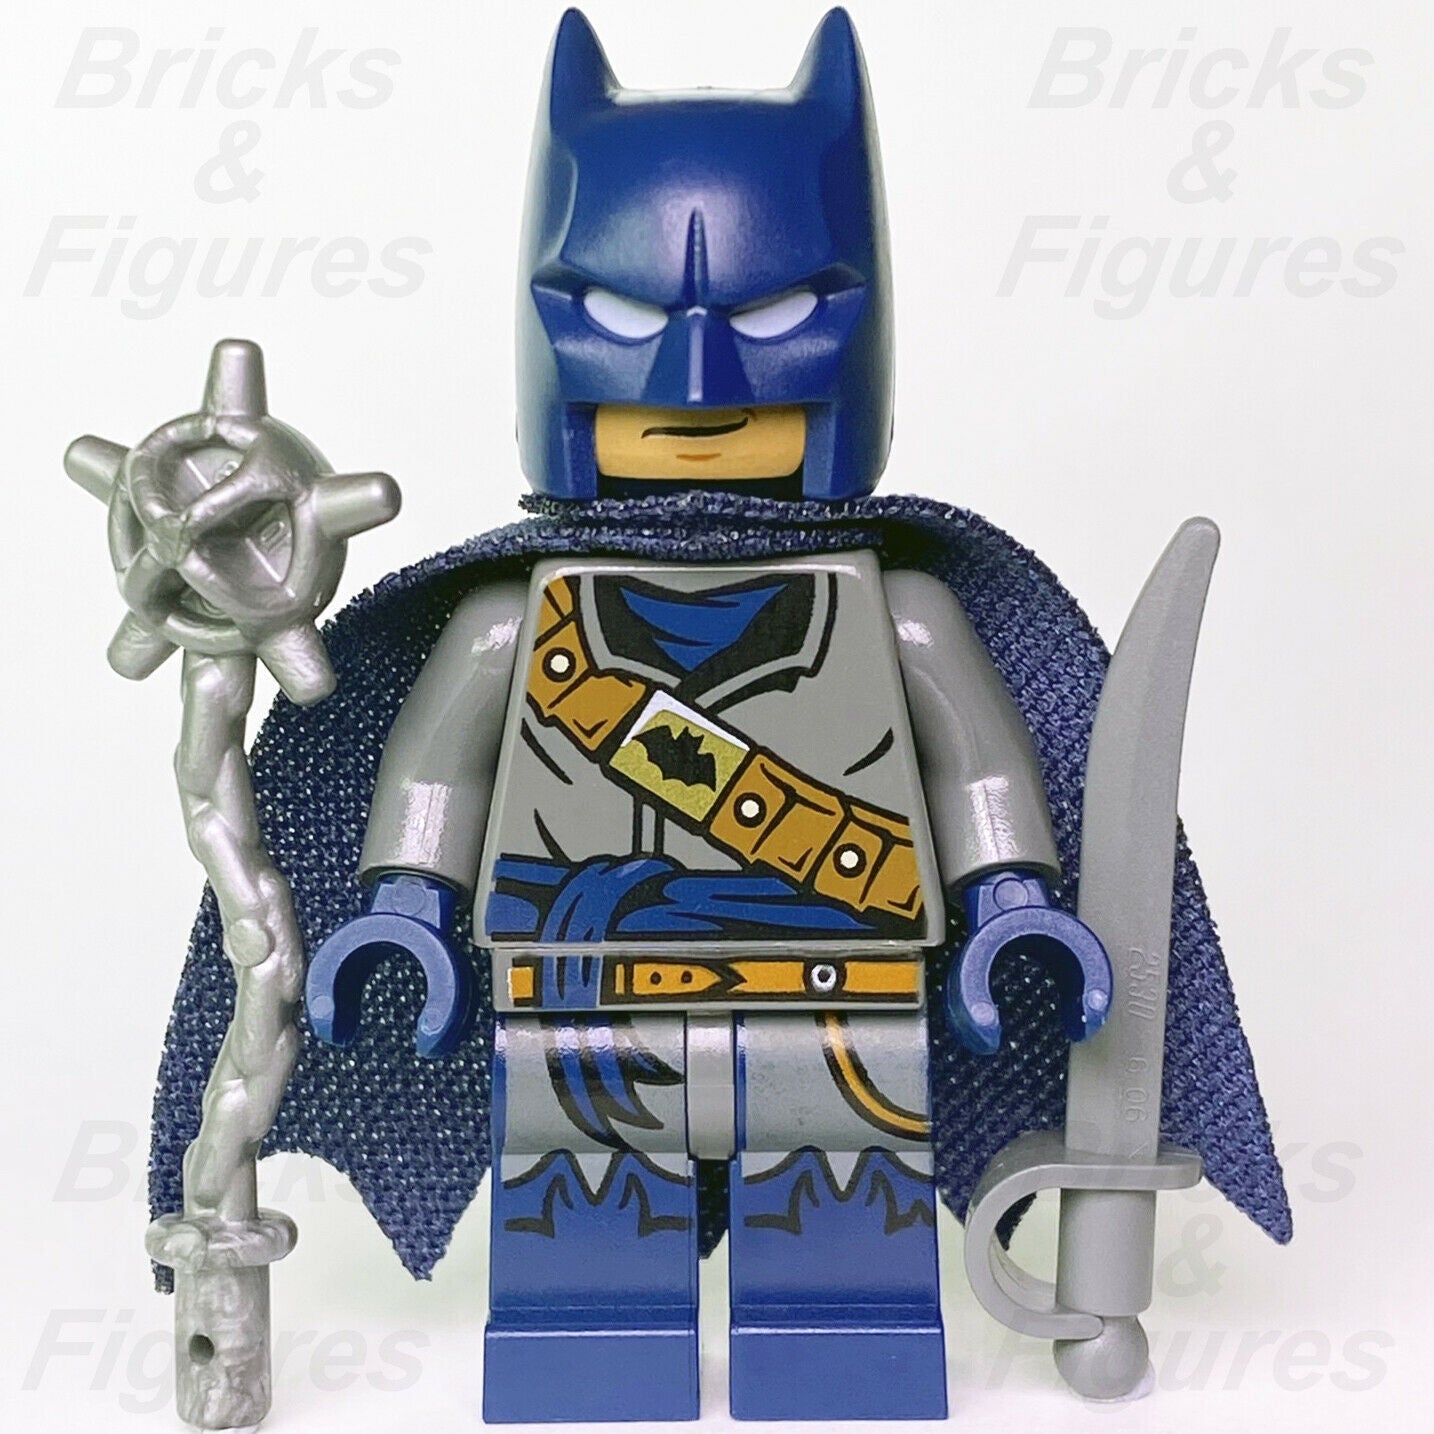 New DC Super Heroes LEGO Pirate Batman 2 Book Exclusive Minifigure sh265 - Bricks & Figures